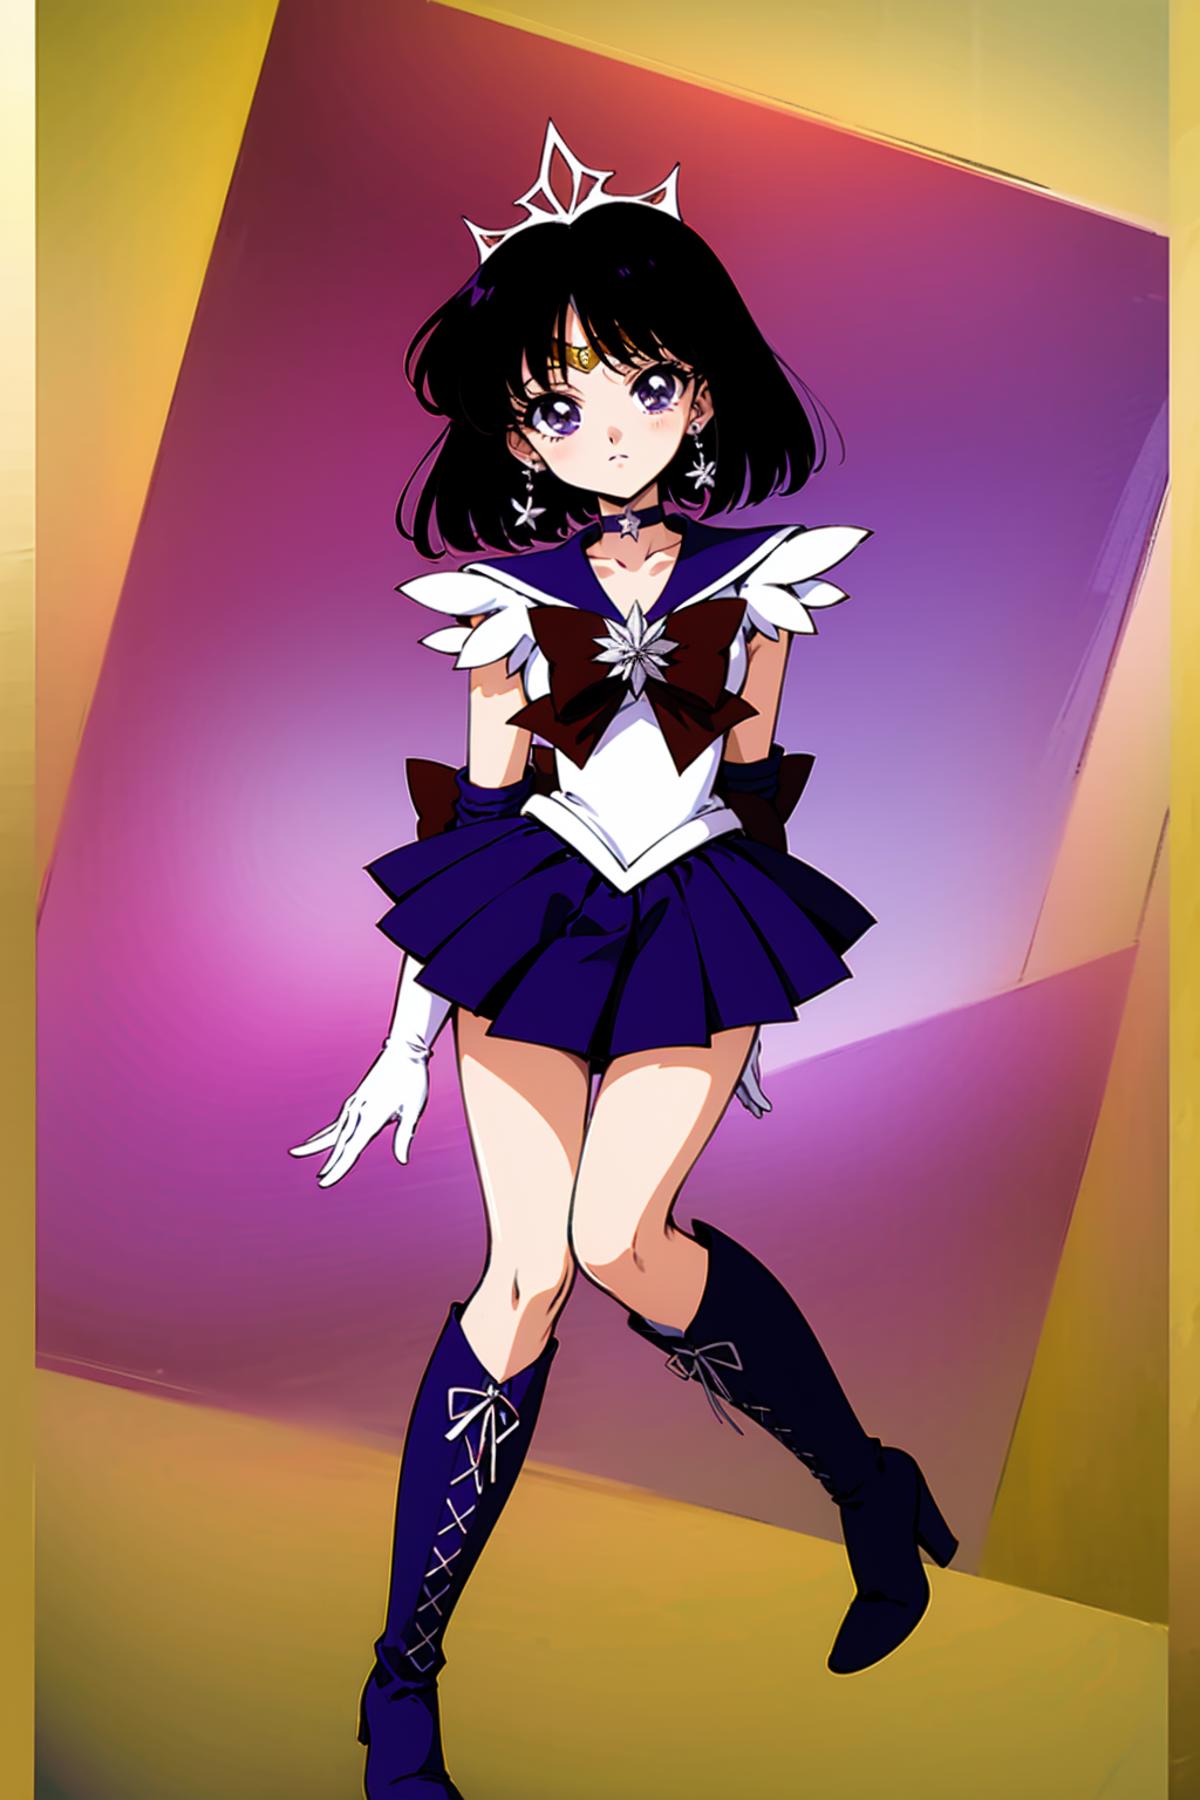 Sailor Saturn / Hotaru Tomoe (Sailor Moon) - Lora image by ElizaPottinger